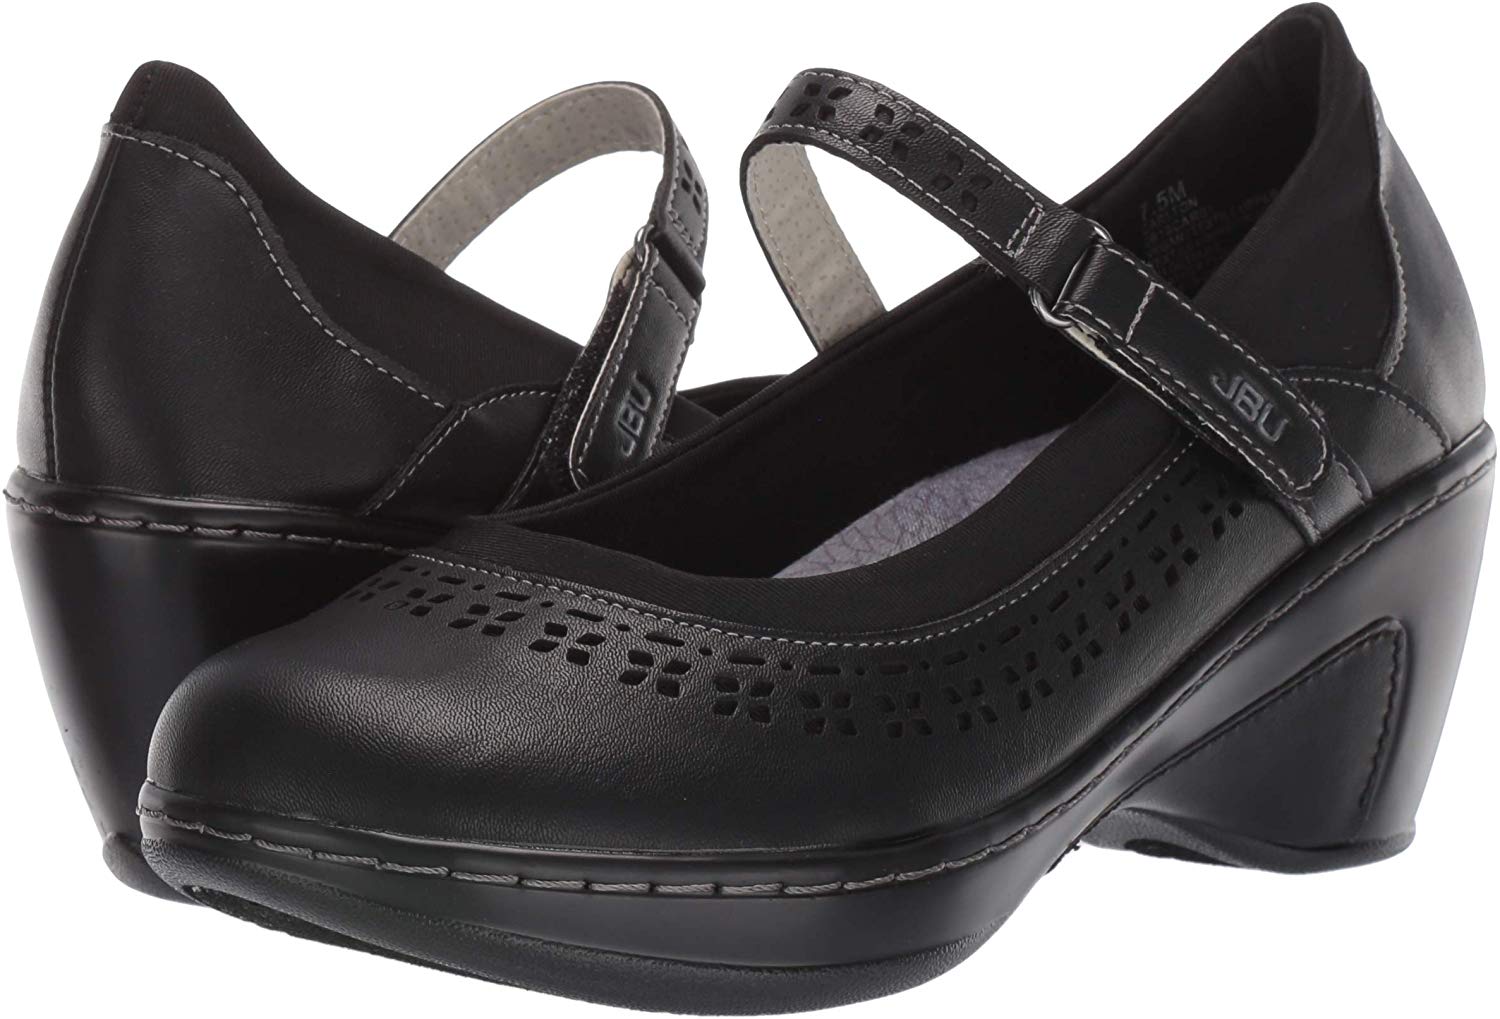 JBU Women's Shoes Carlton Pump Closed Toe Mary Jane Pumps, Black, Size ...